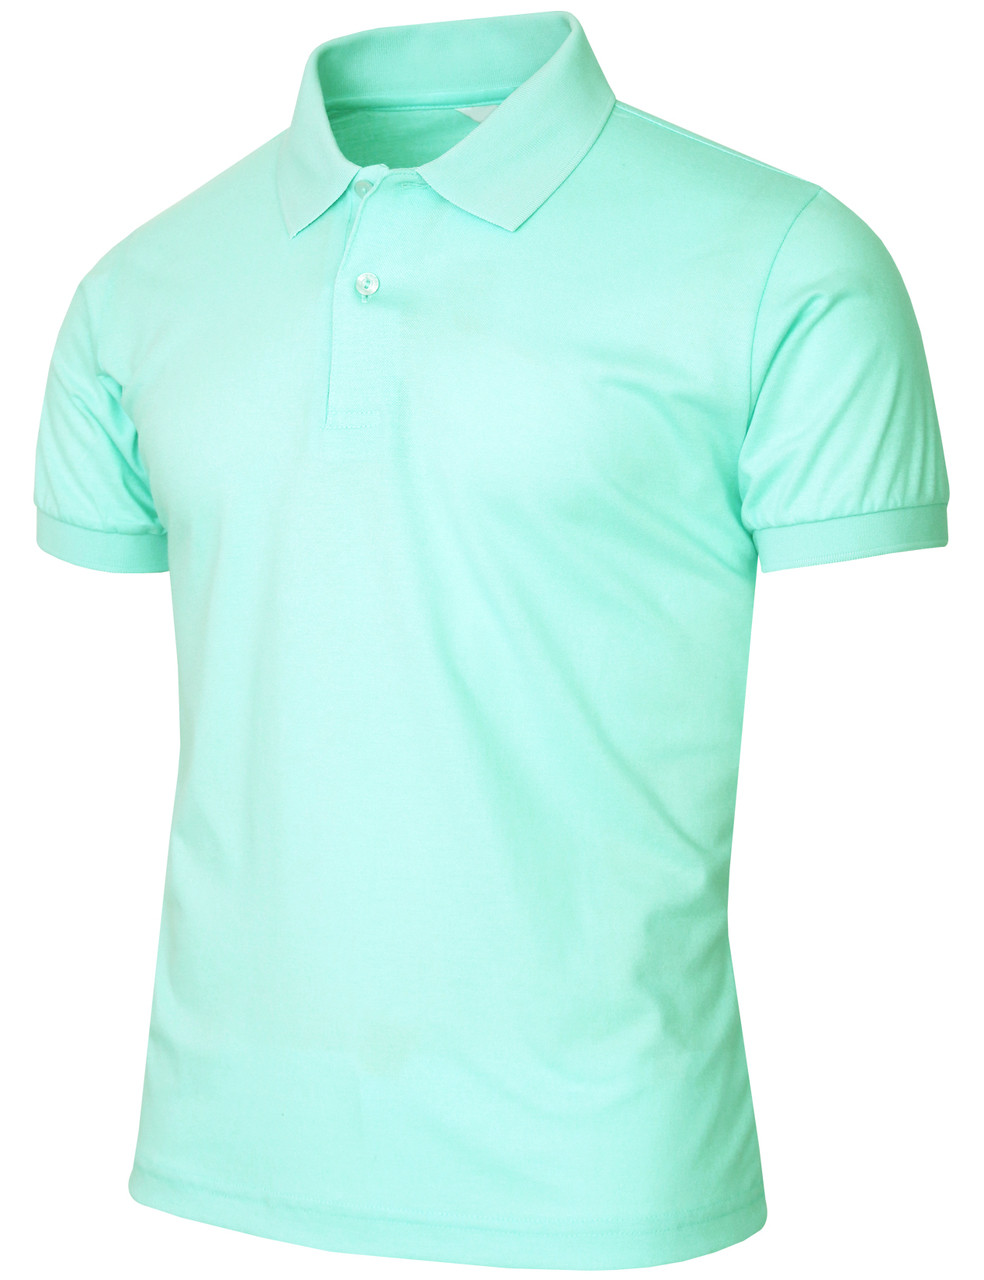 Unisex Pique solid Polo Shirt